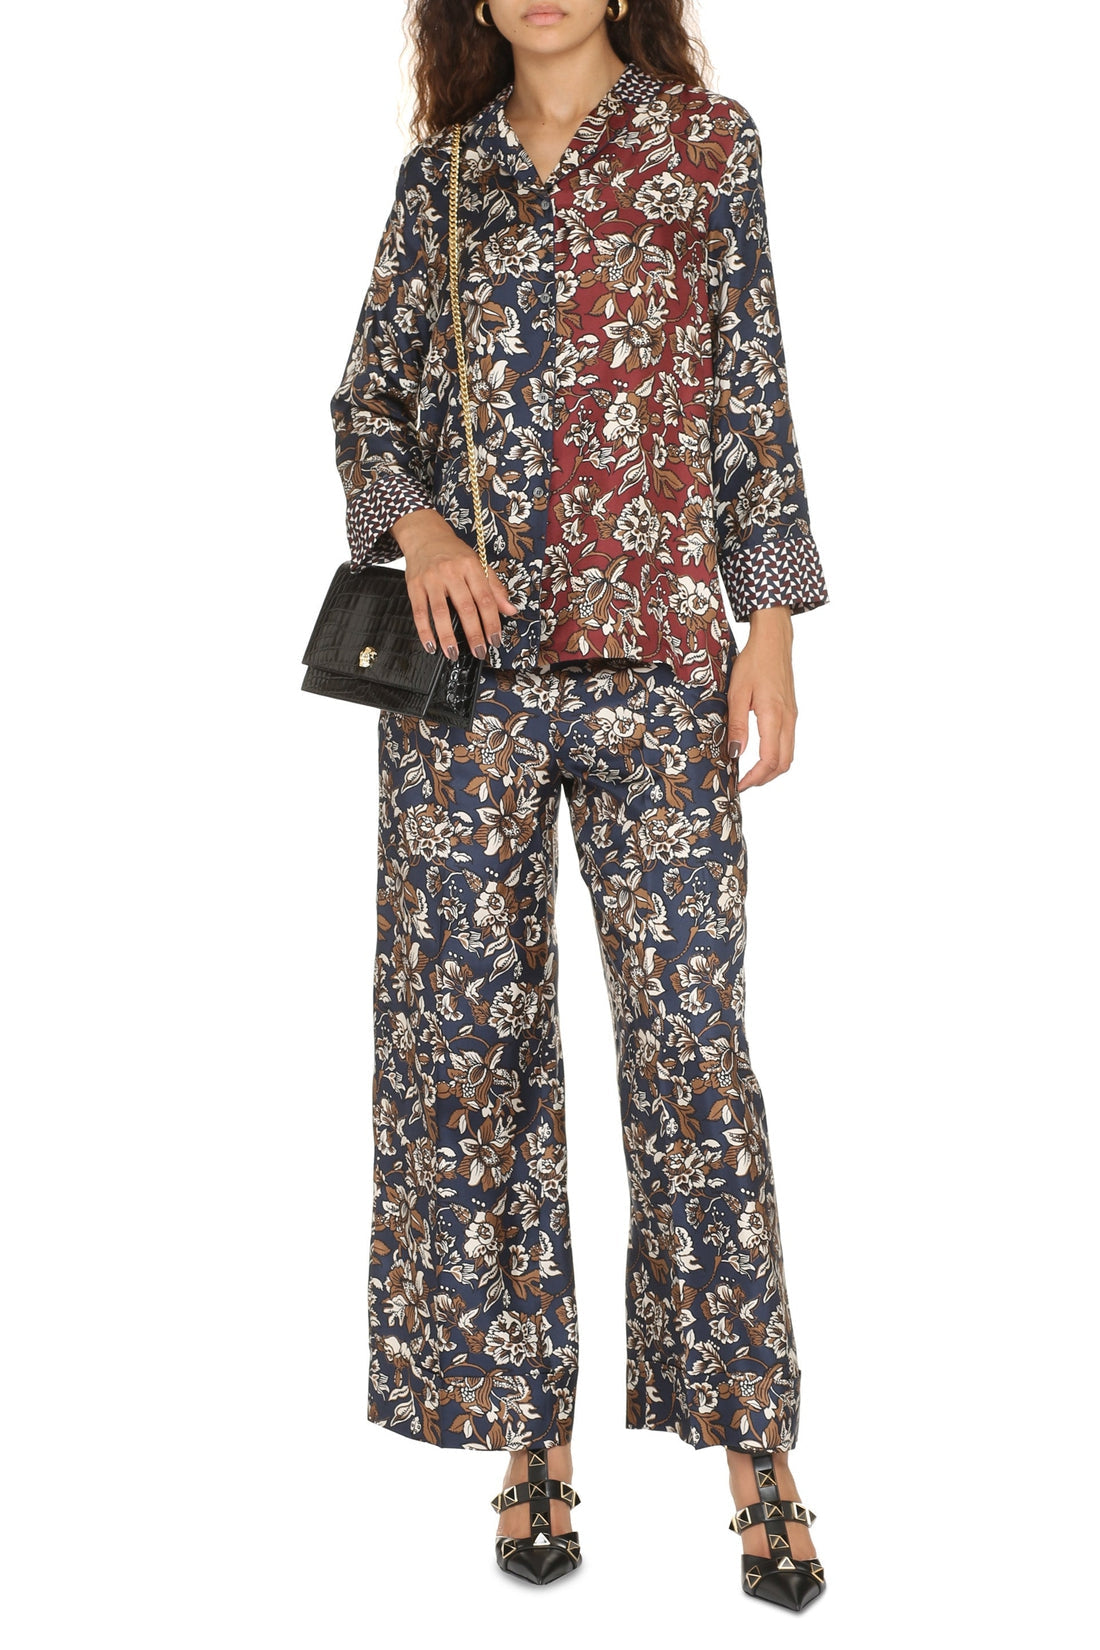 S MAX MARA-OUTLET-SALE-Mogol printed silk pajama blouse-ARCHIVIST